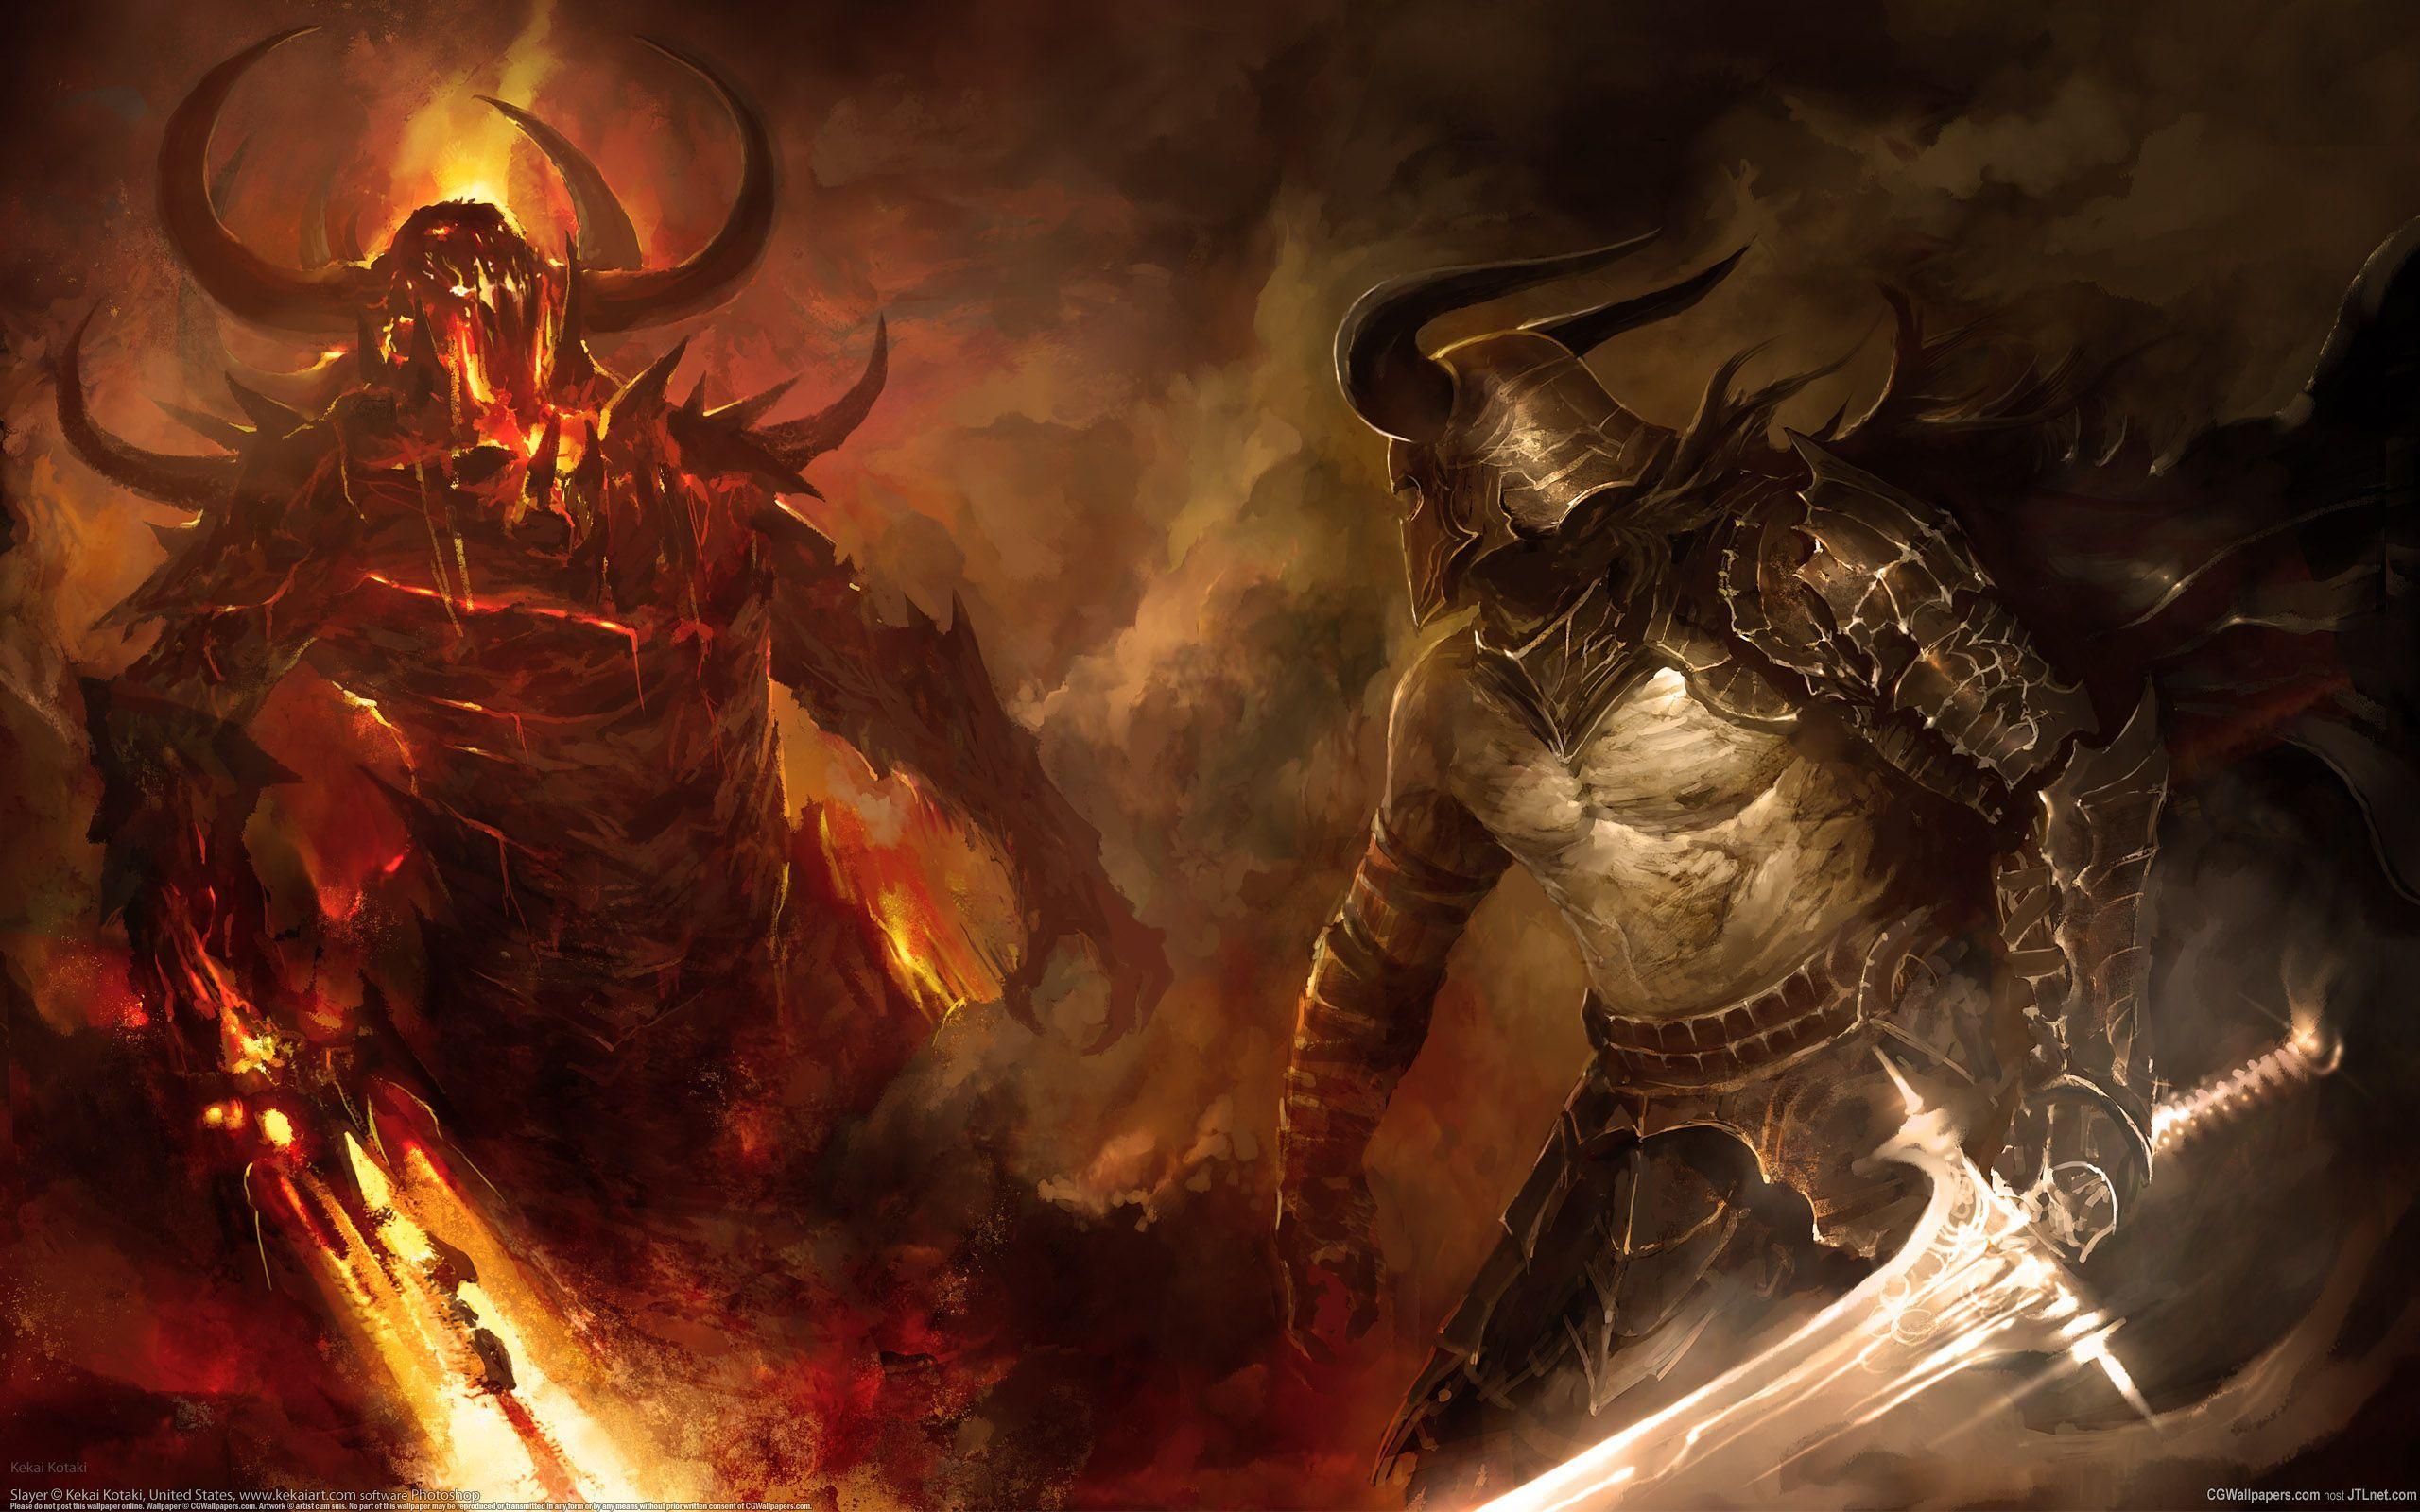 HD Good Vs Evil Warrior Version Wallpaper. Download Free -123408. Fantasy illustration, Guild wars, Art